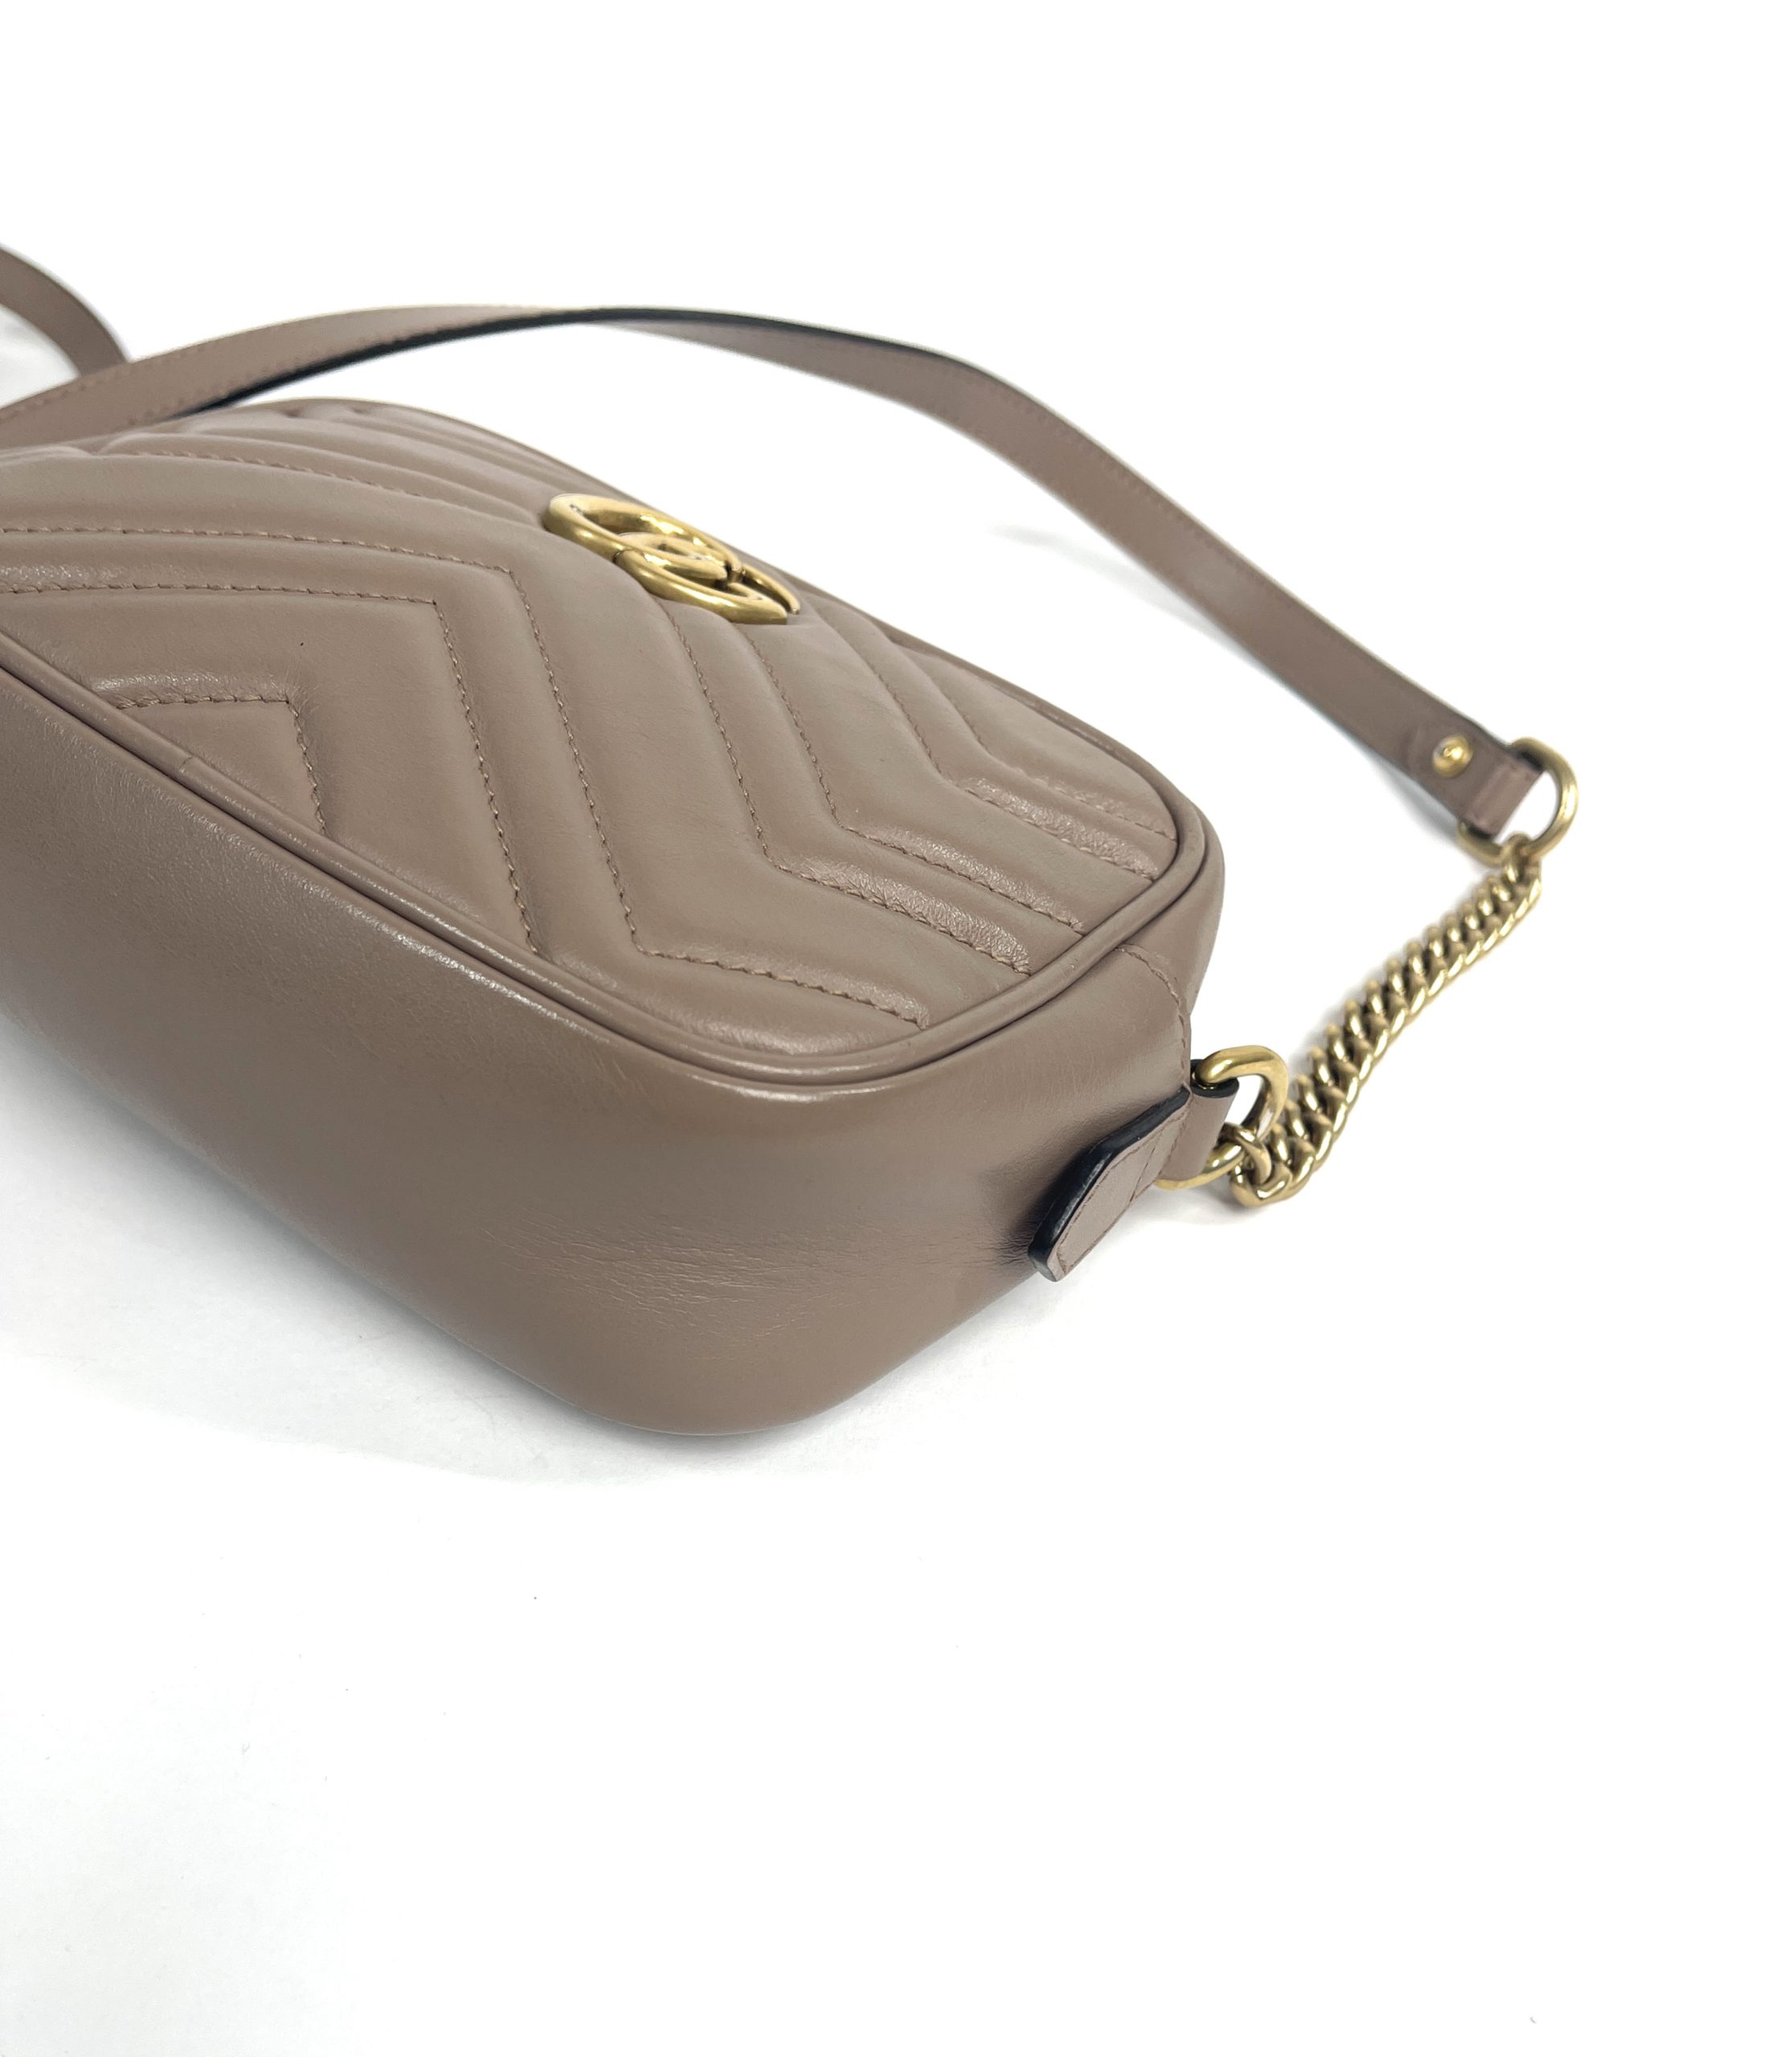 Gucci Marmont Mini Brown Leather Handbag